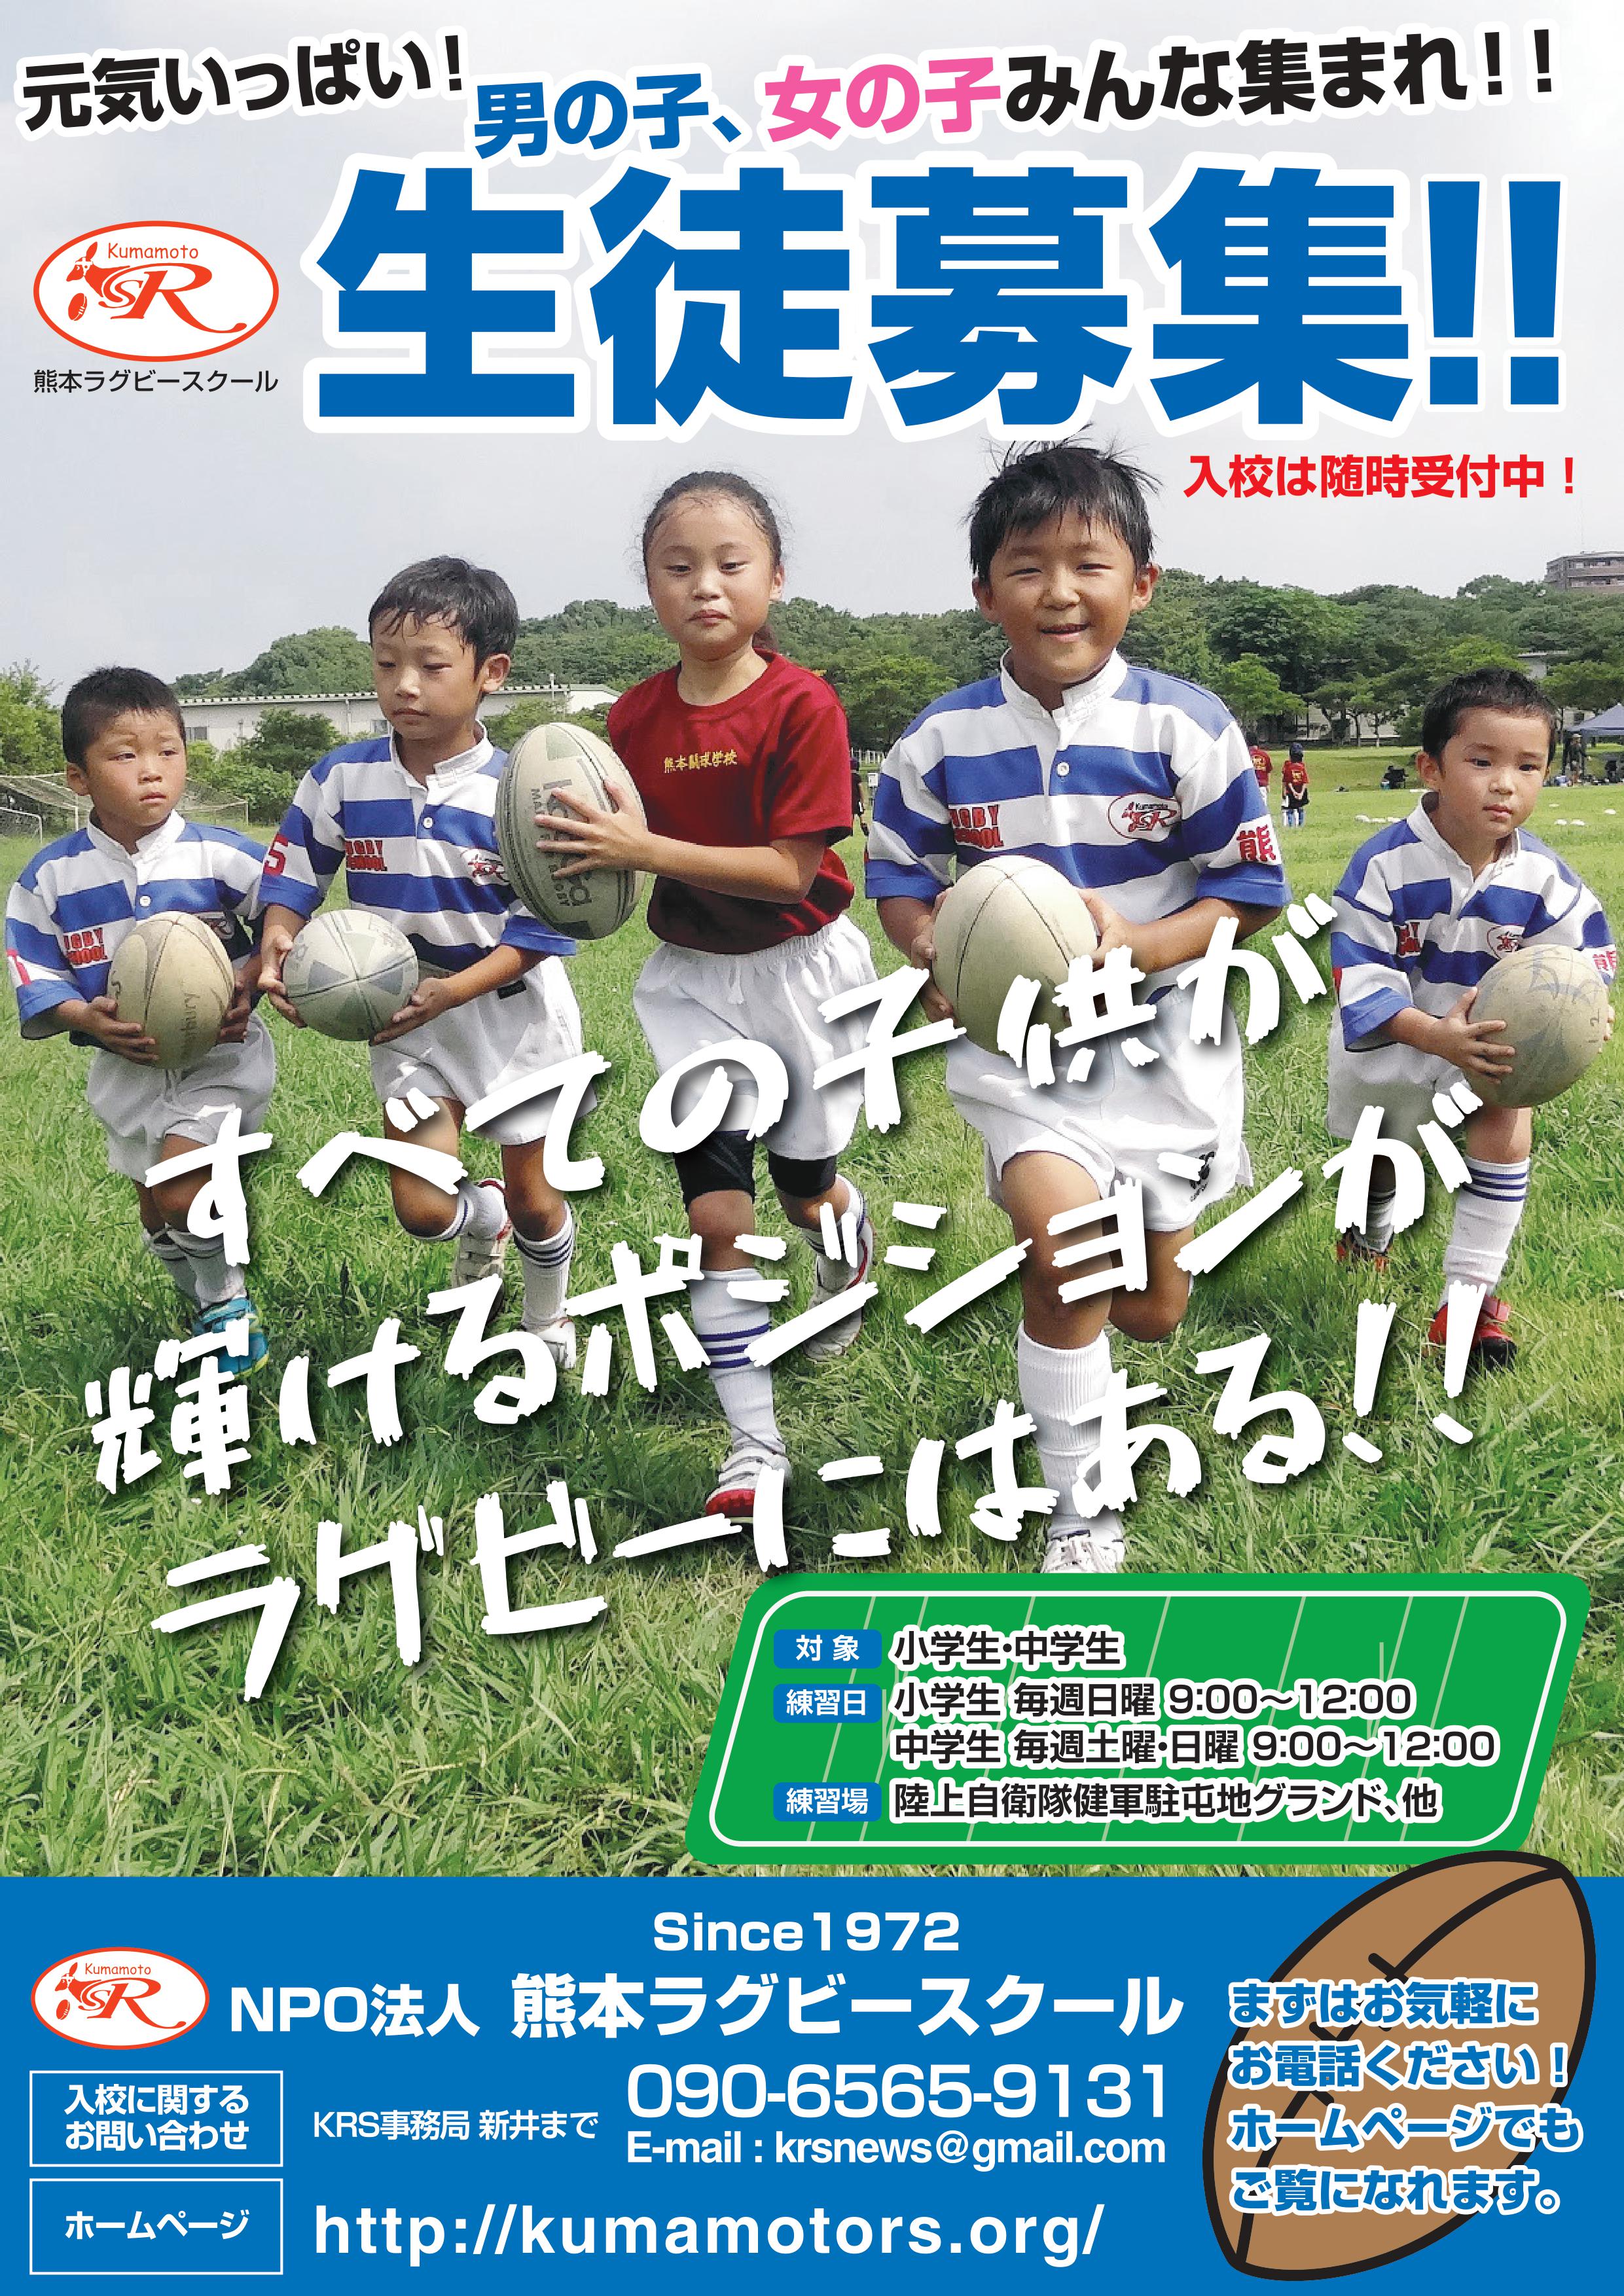 Npo 特定非営利活動法人 熊本ラグビースクール公式サイト